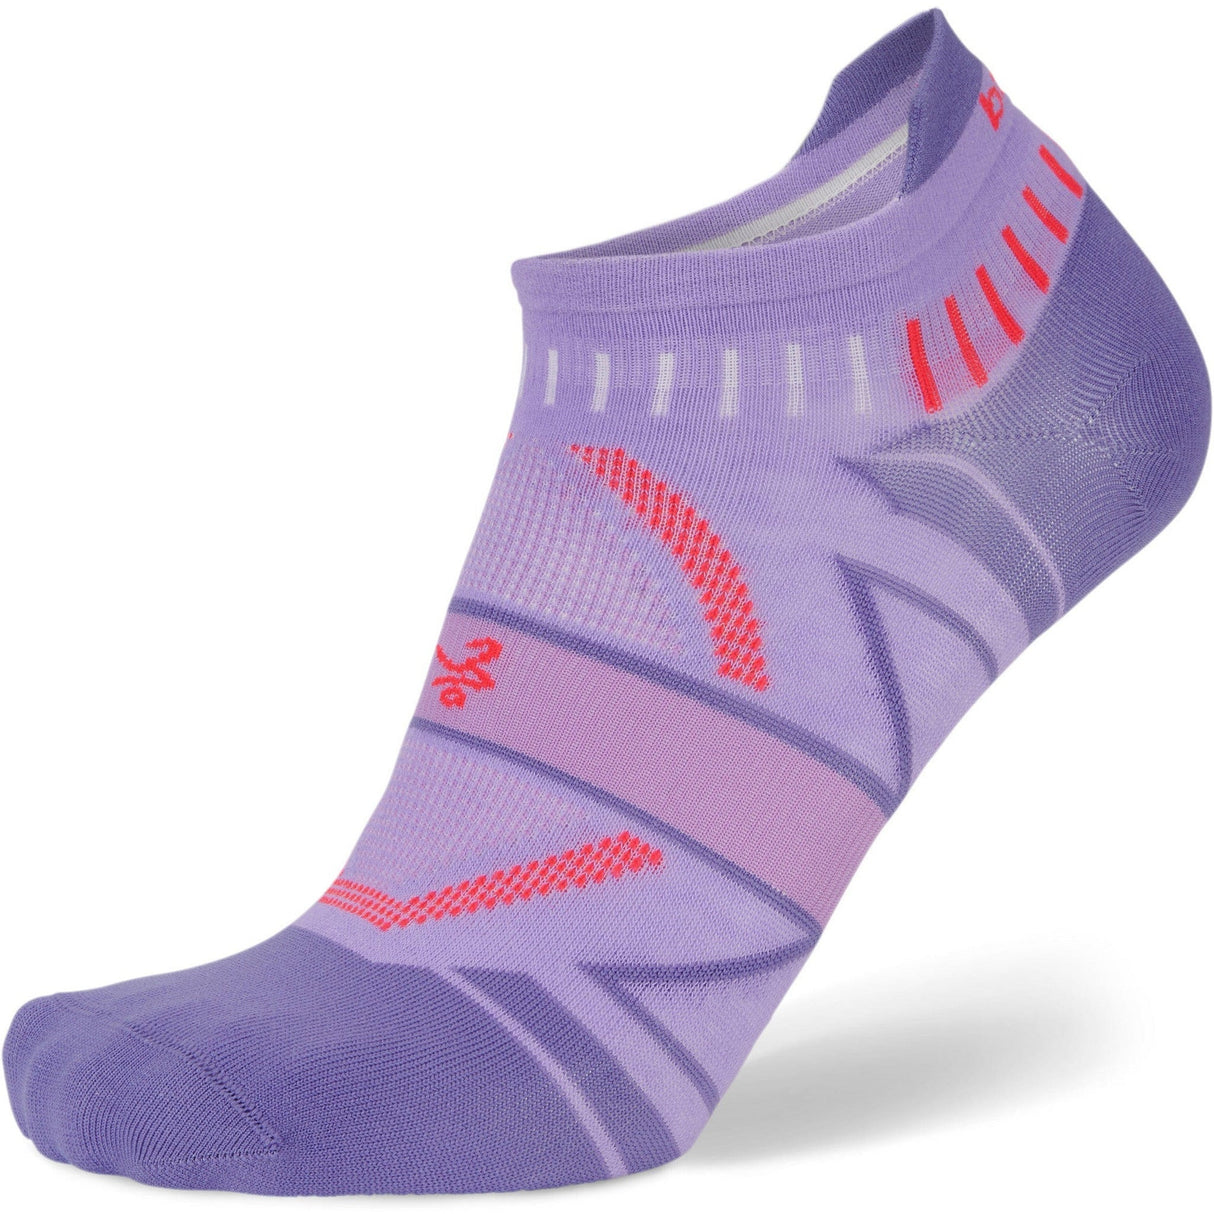 Balega Hidden Dry No Show Tab Socks  -  Small / Lavender